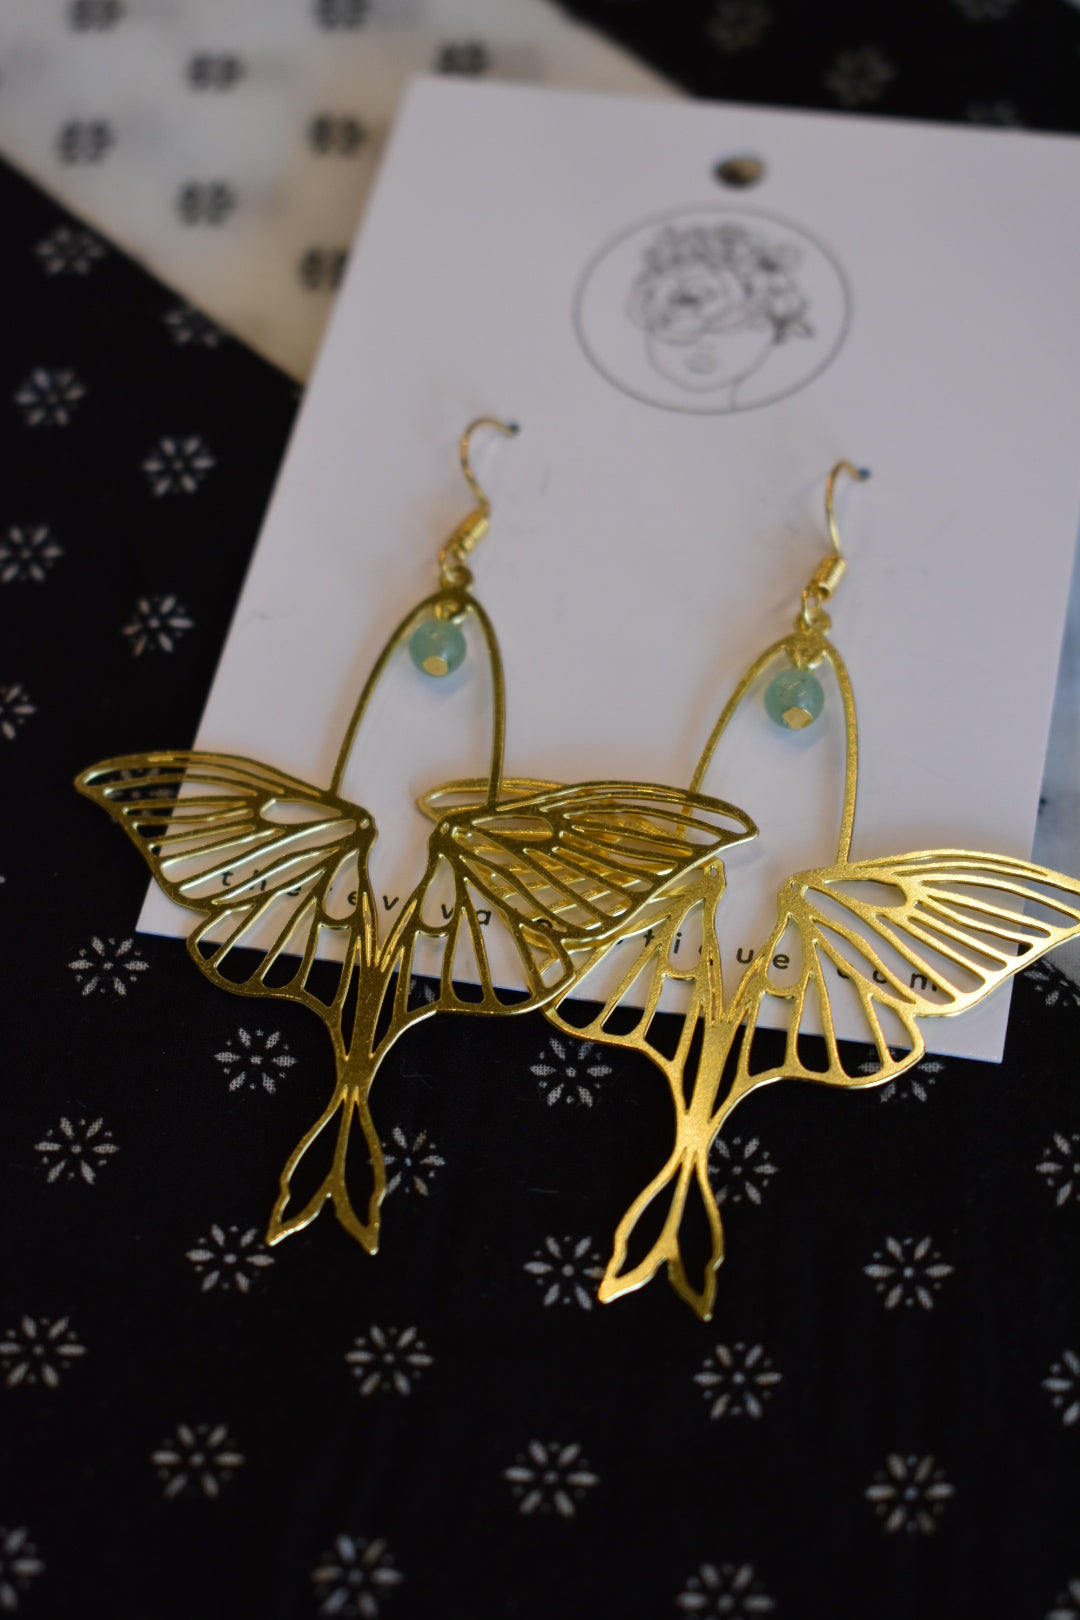 gold lunar moth earrings with aventurine bead nickel free the revival 